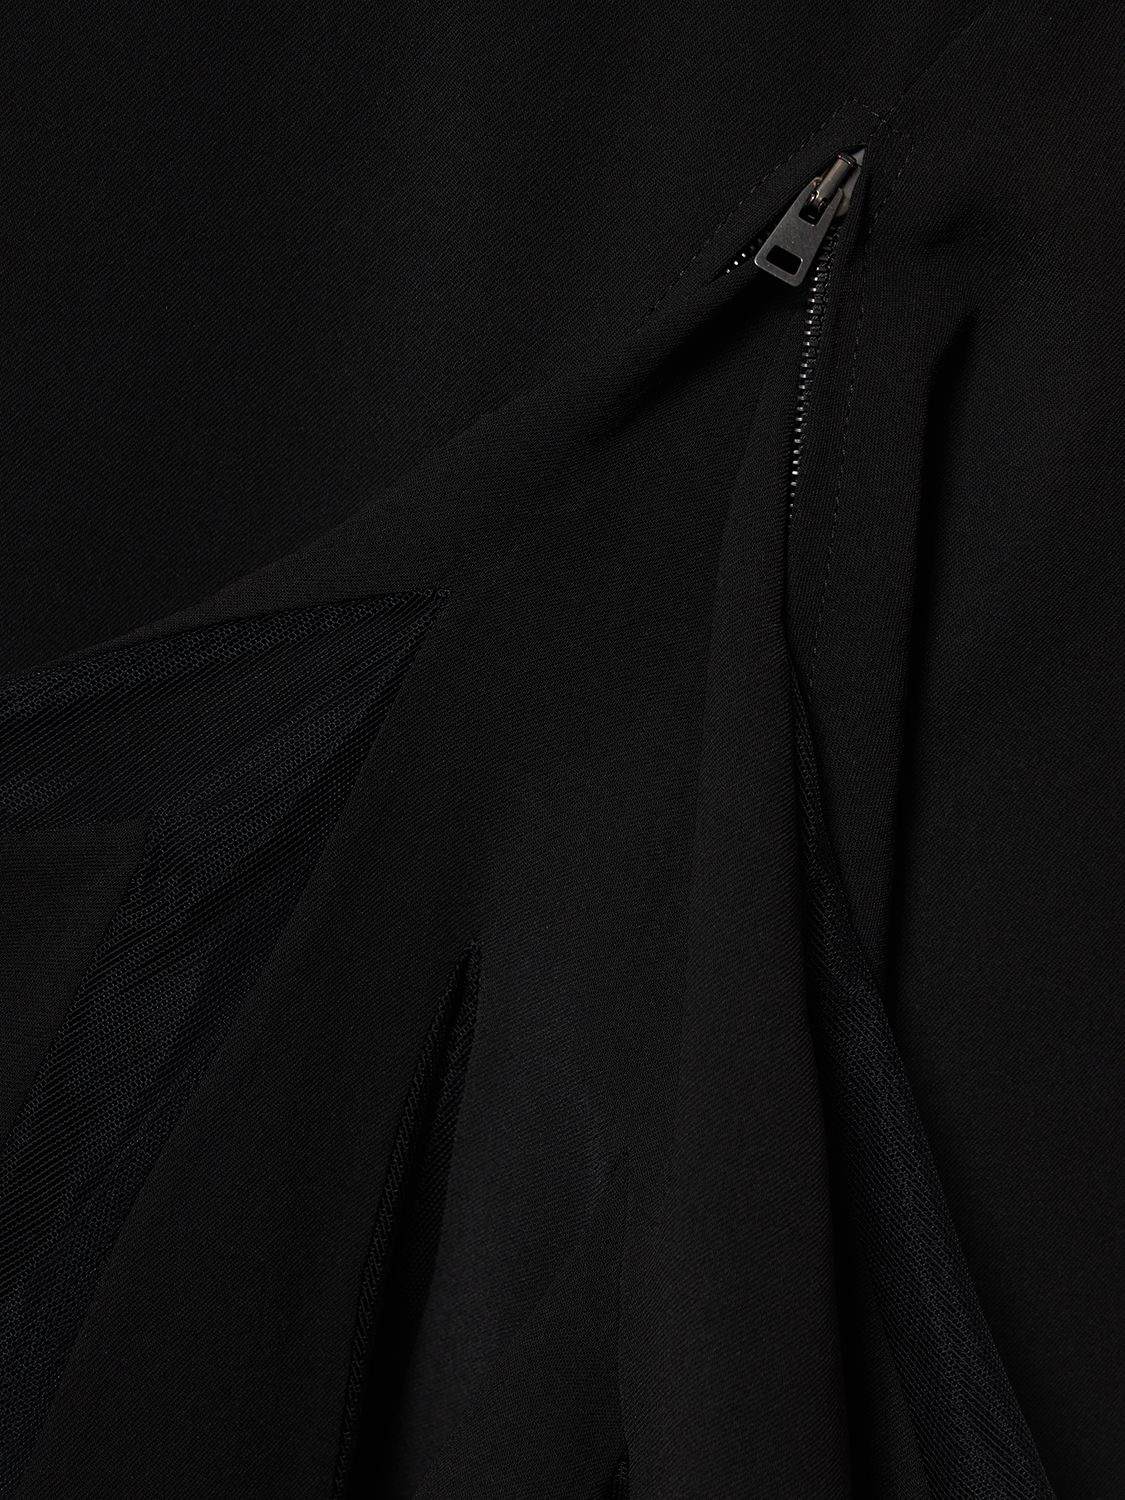 Mugler Mesh-panel cutout miniskirt in Black